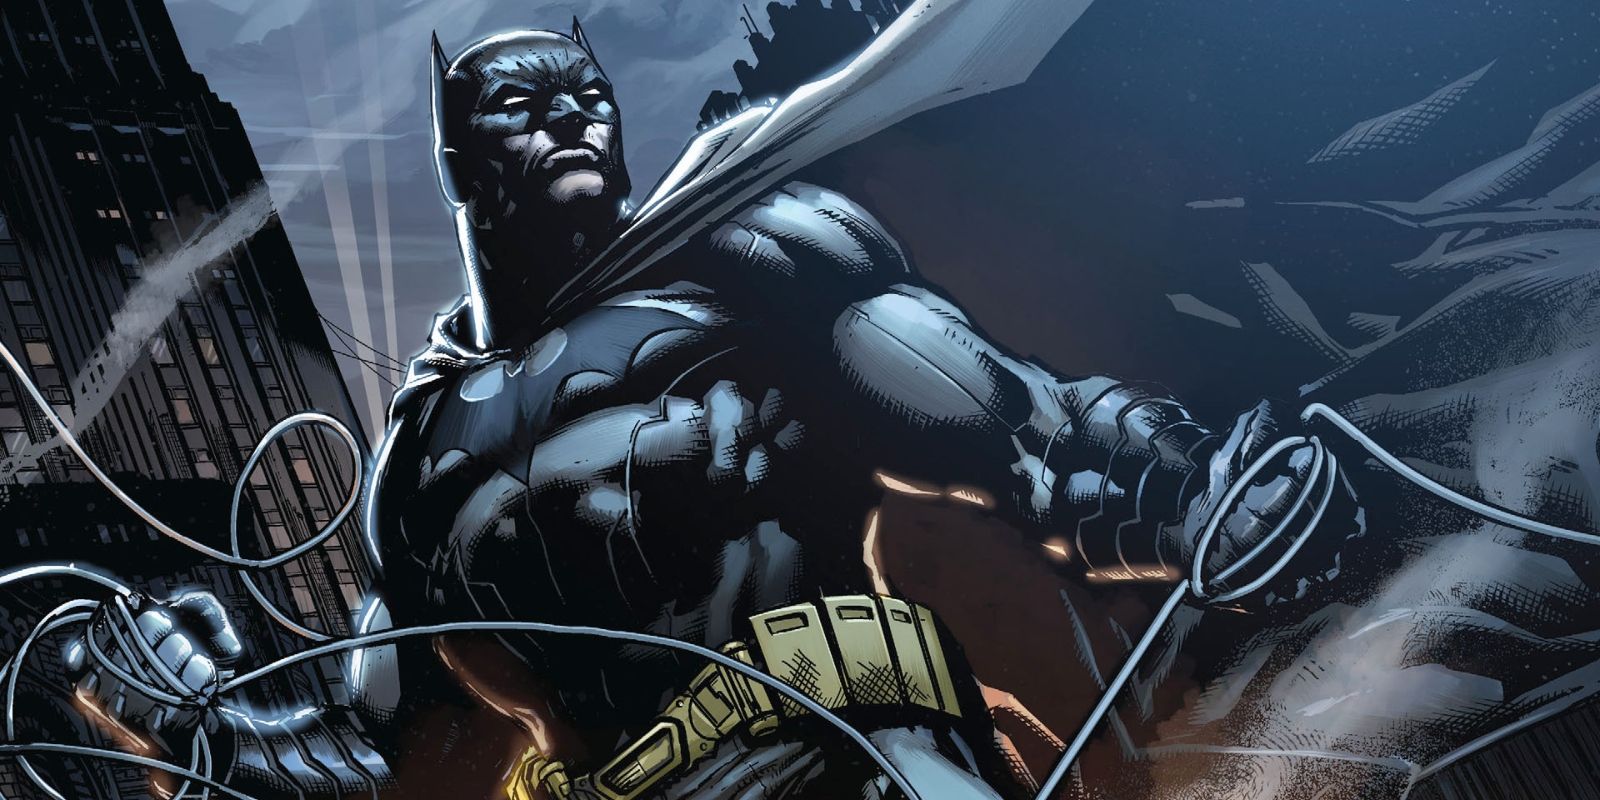 batman comic cover